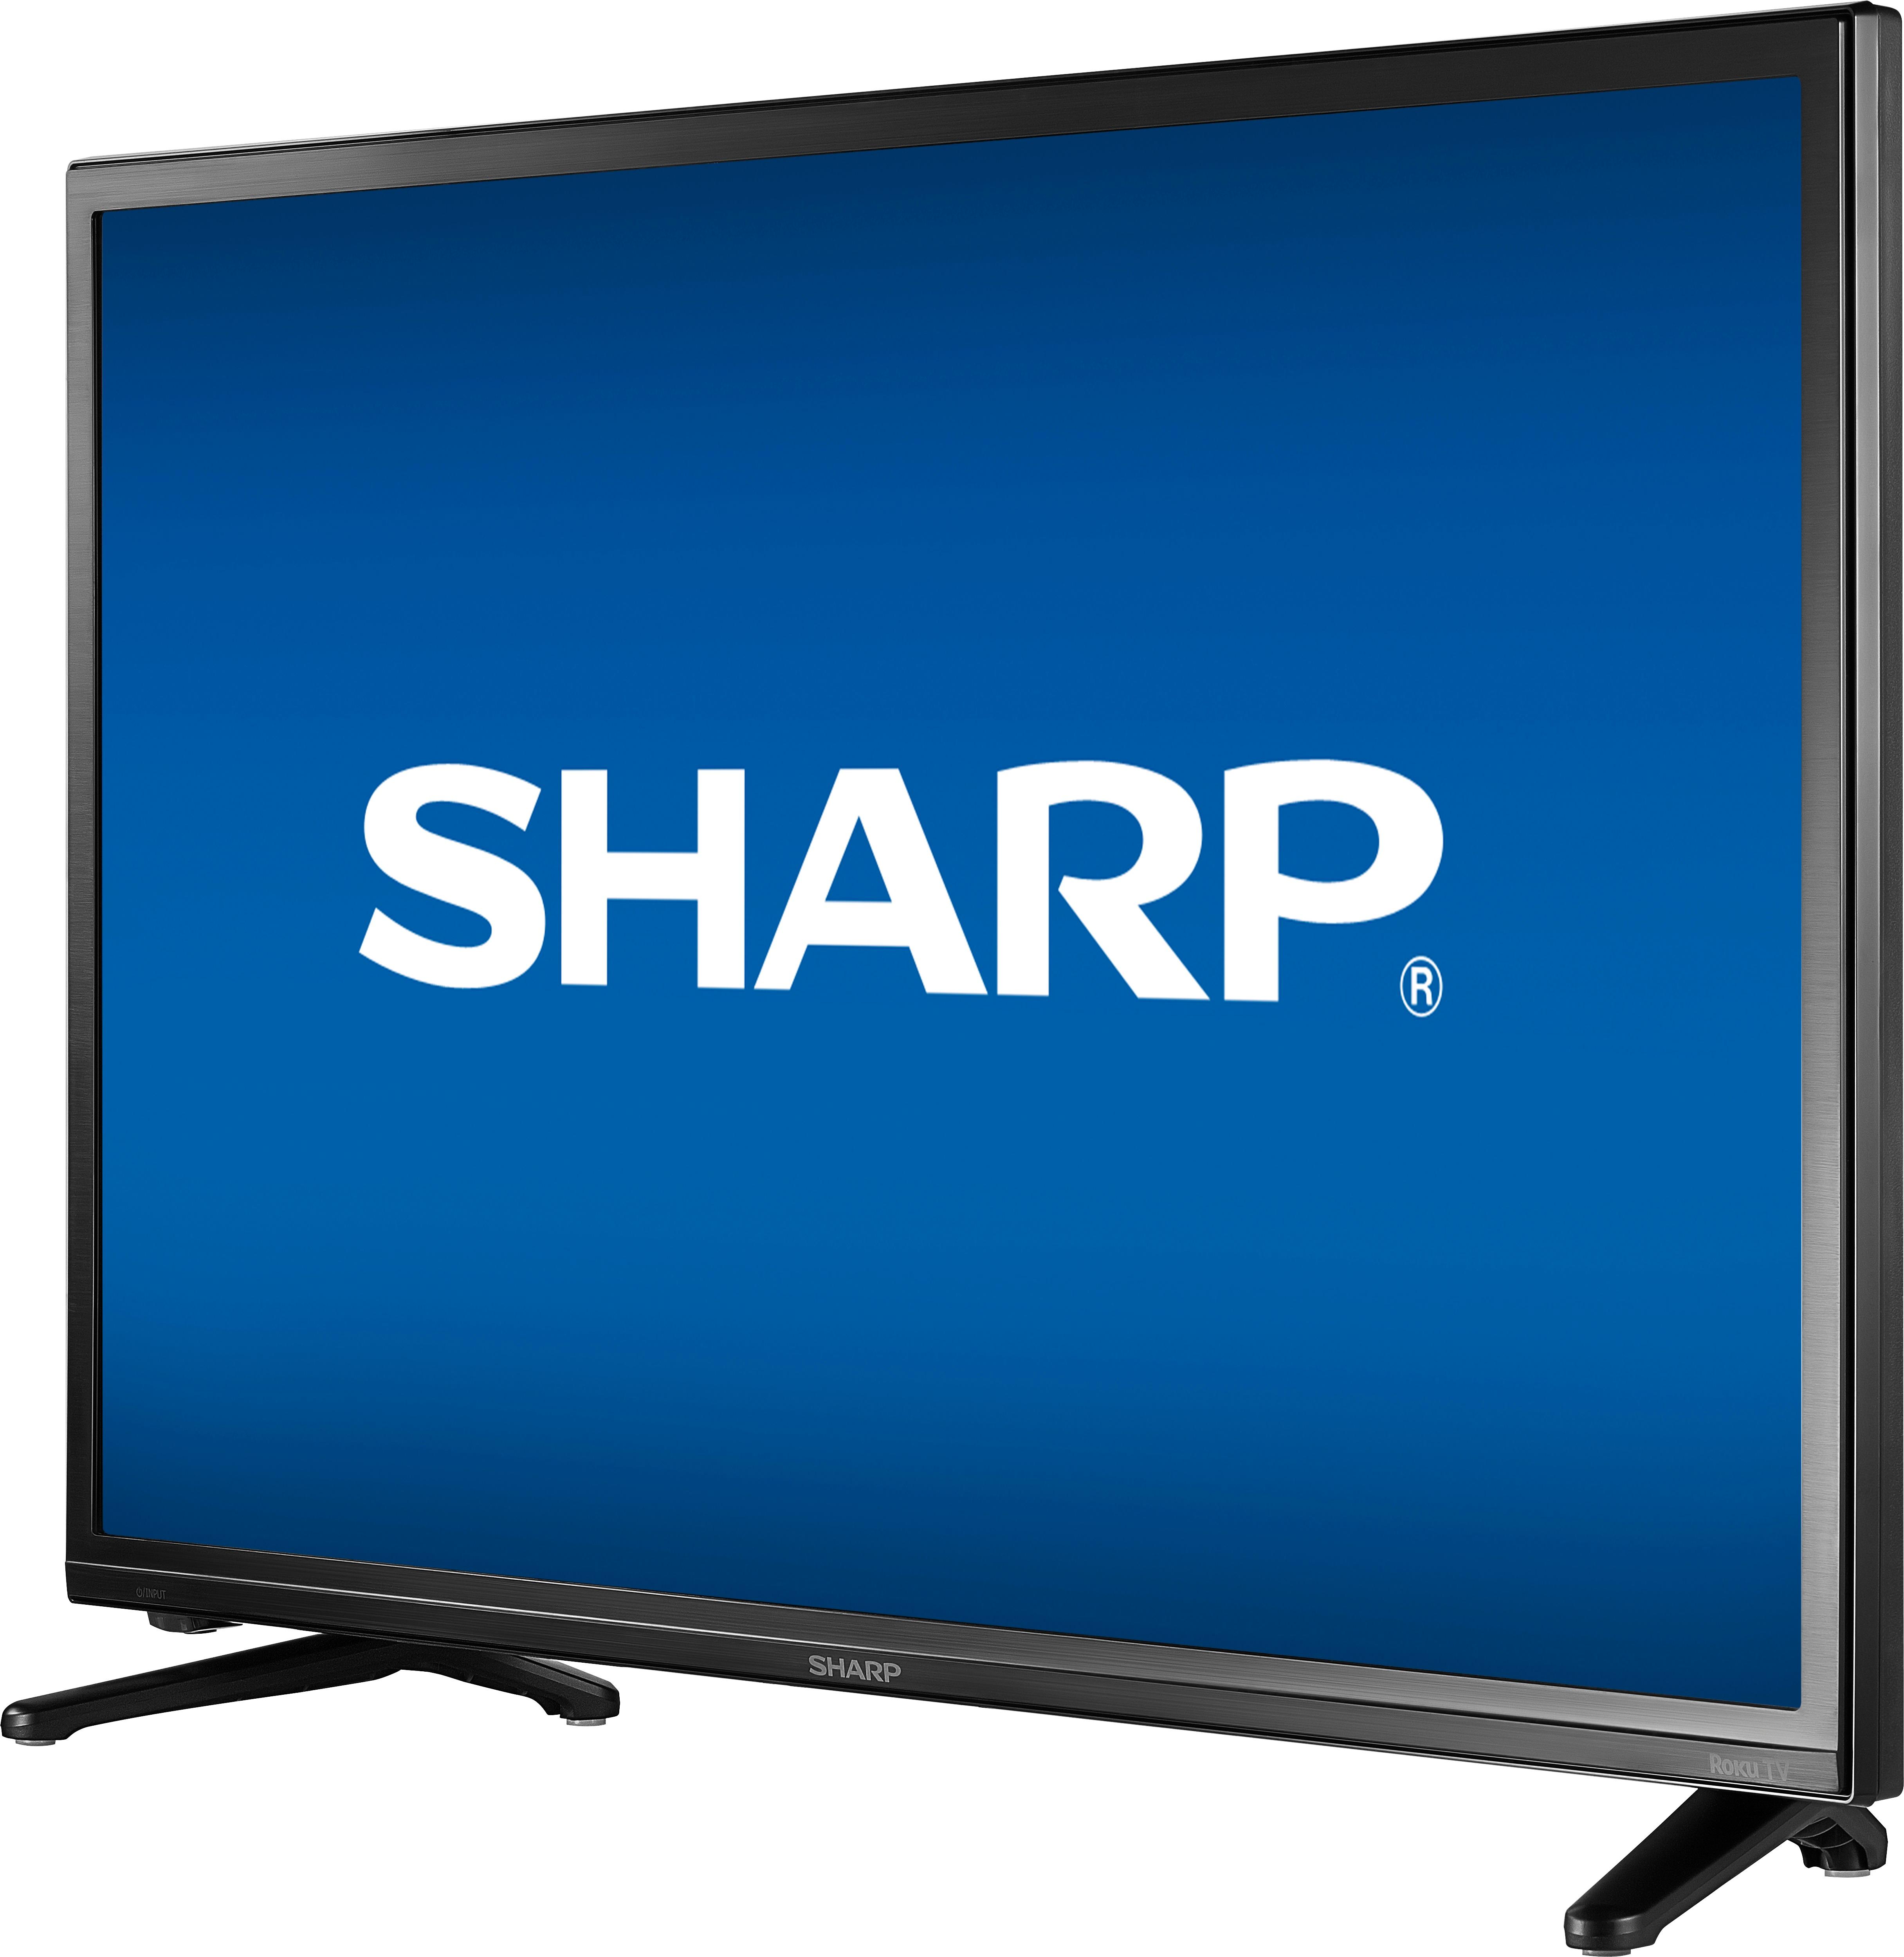 Harga Tv Flat 32 Inch Sharp – Daftar Harga Elektronik Terbaru